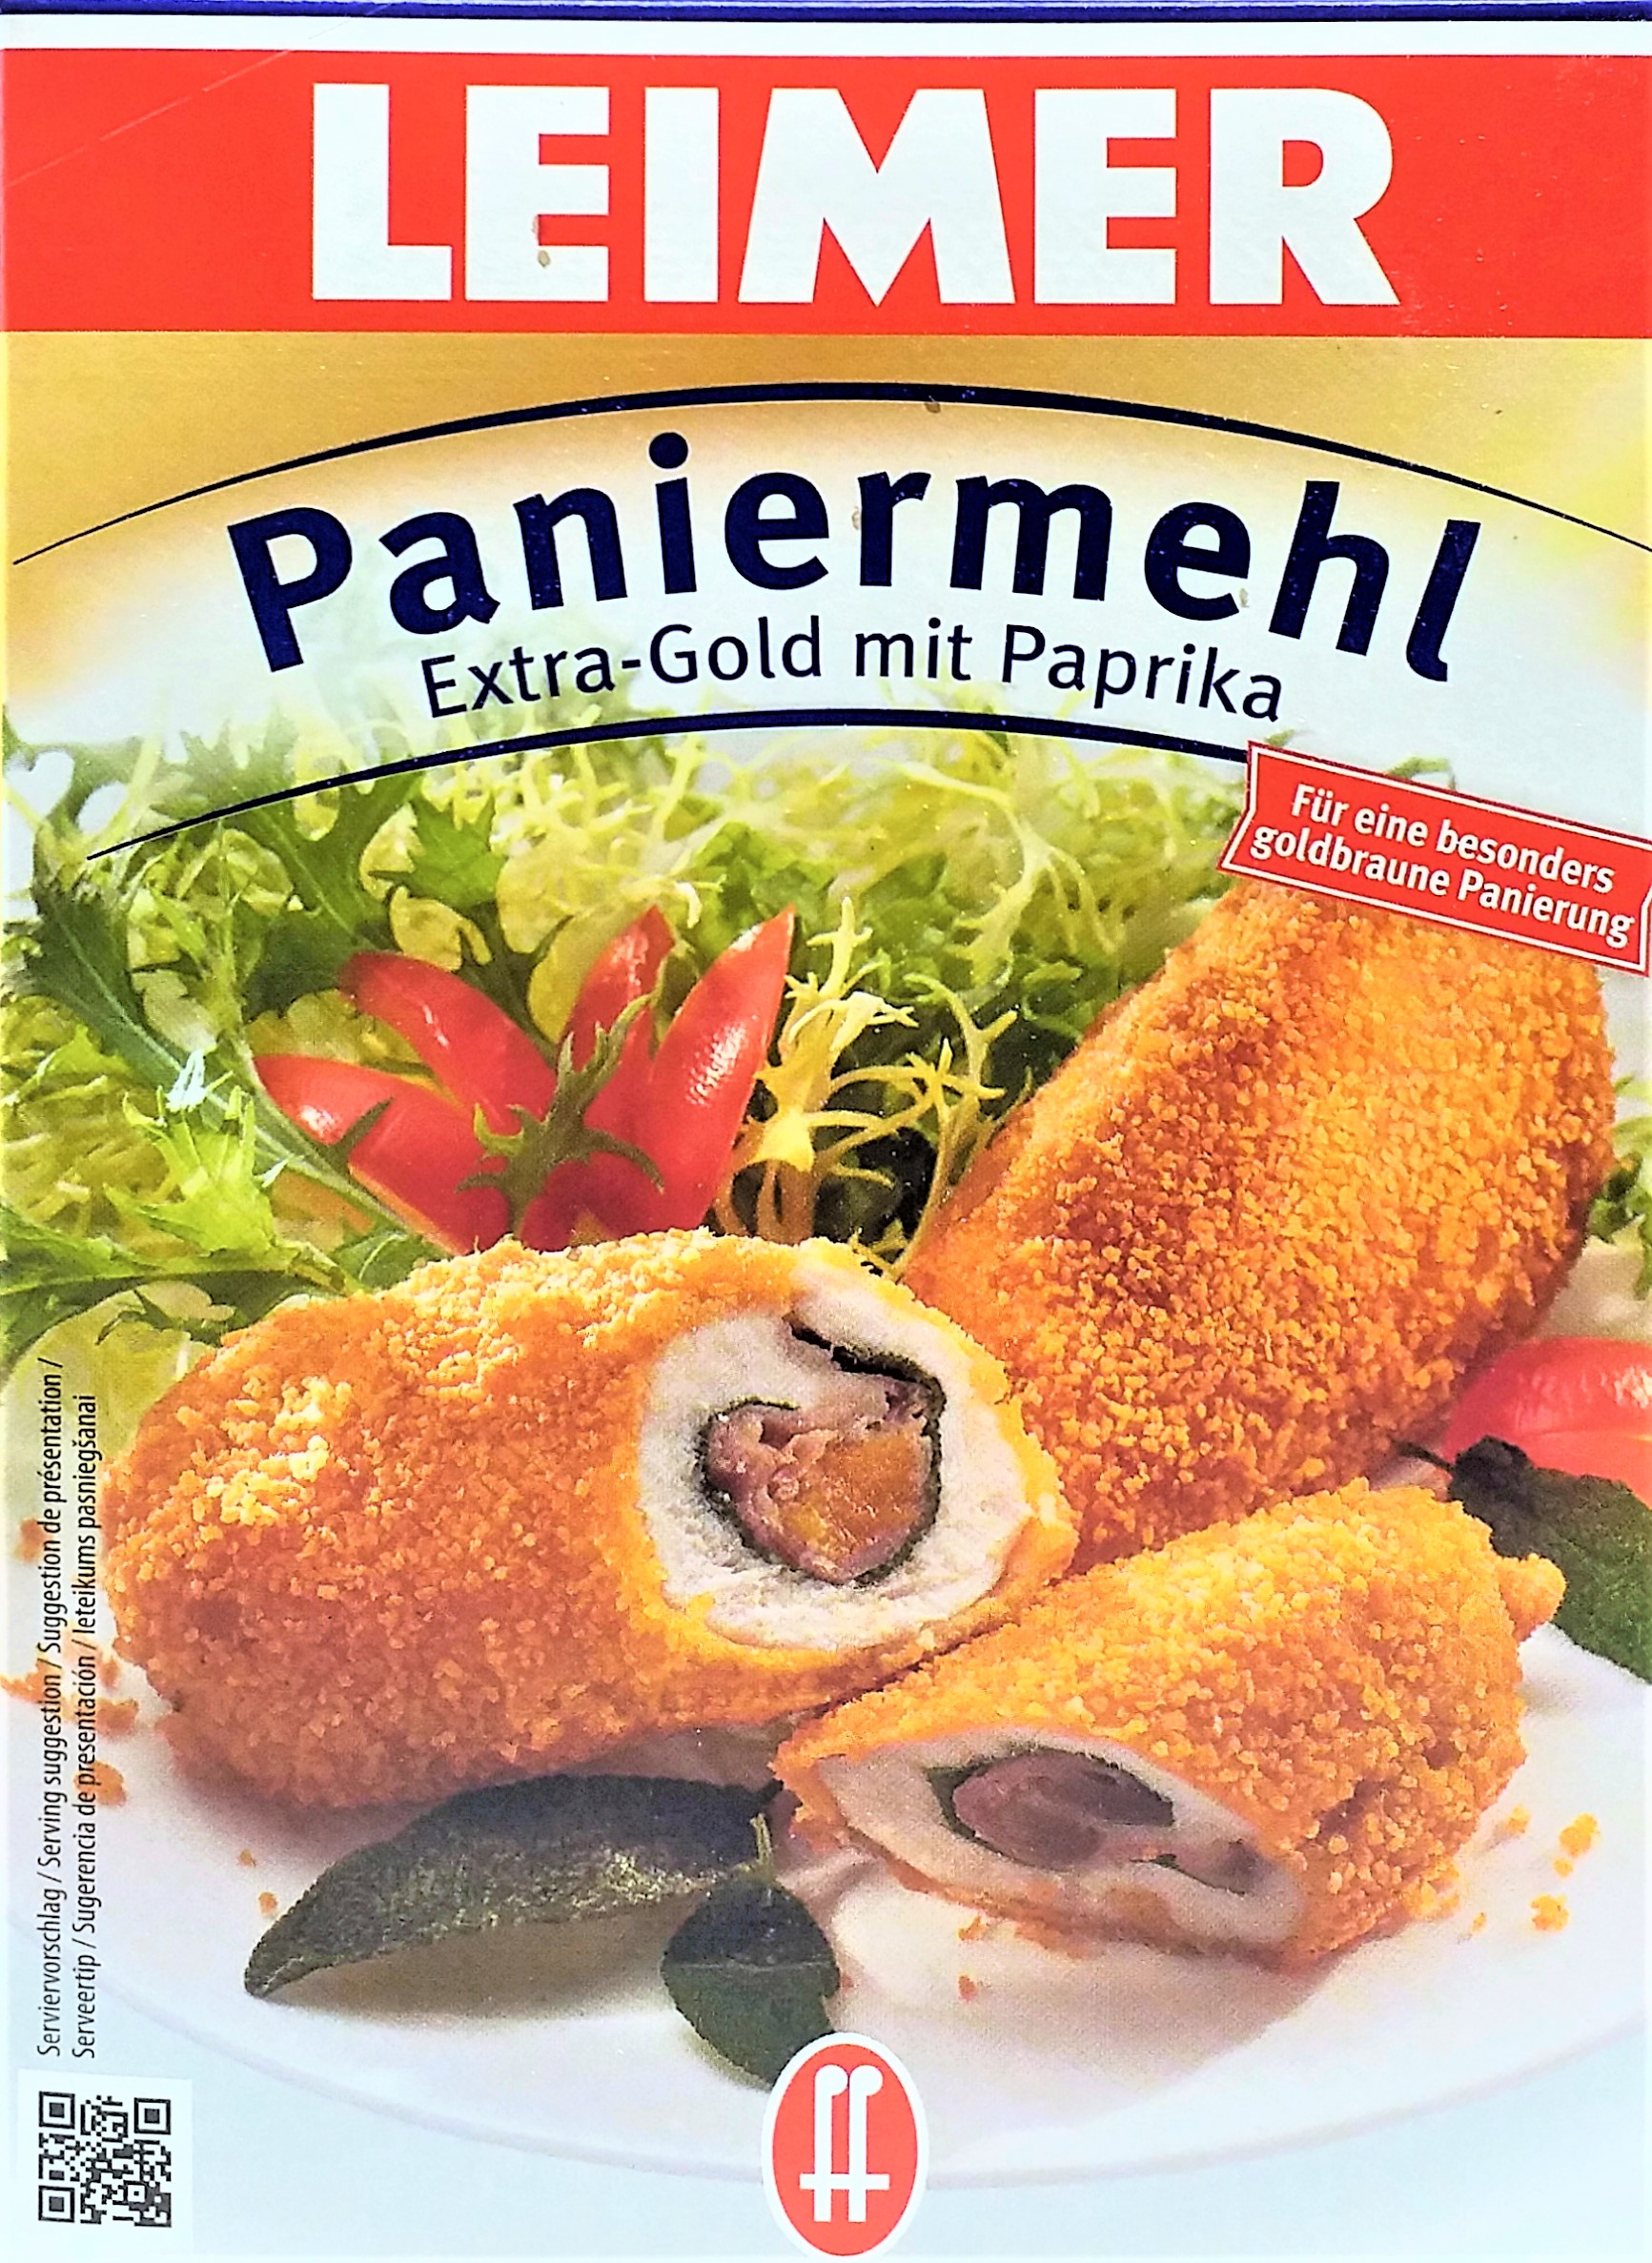 Leimer Paniermehl Extra Gold mit Paprika 400g